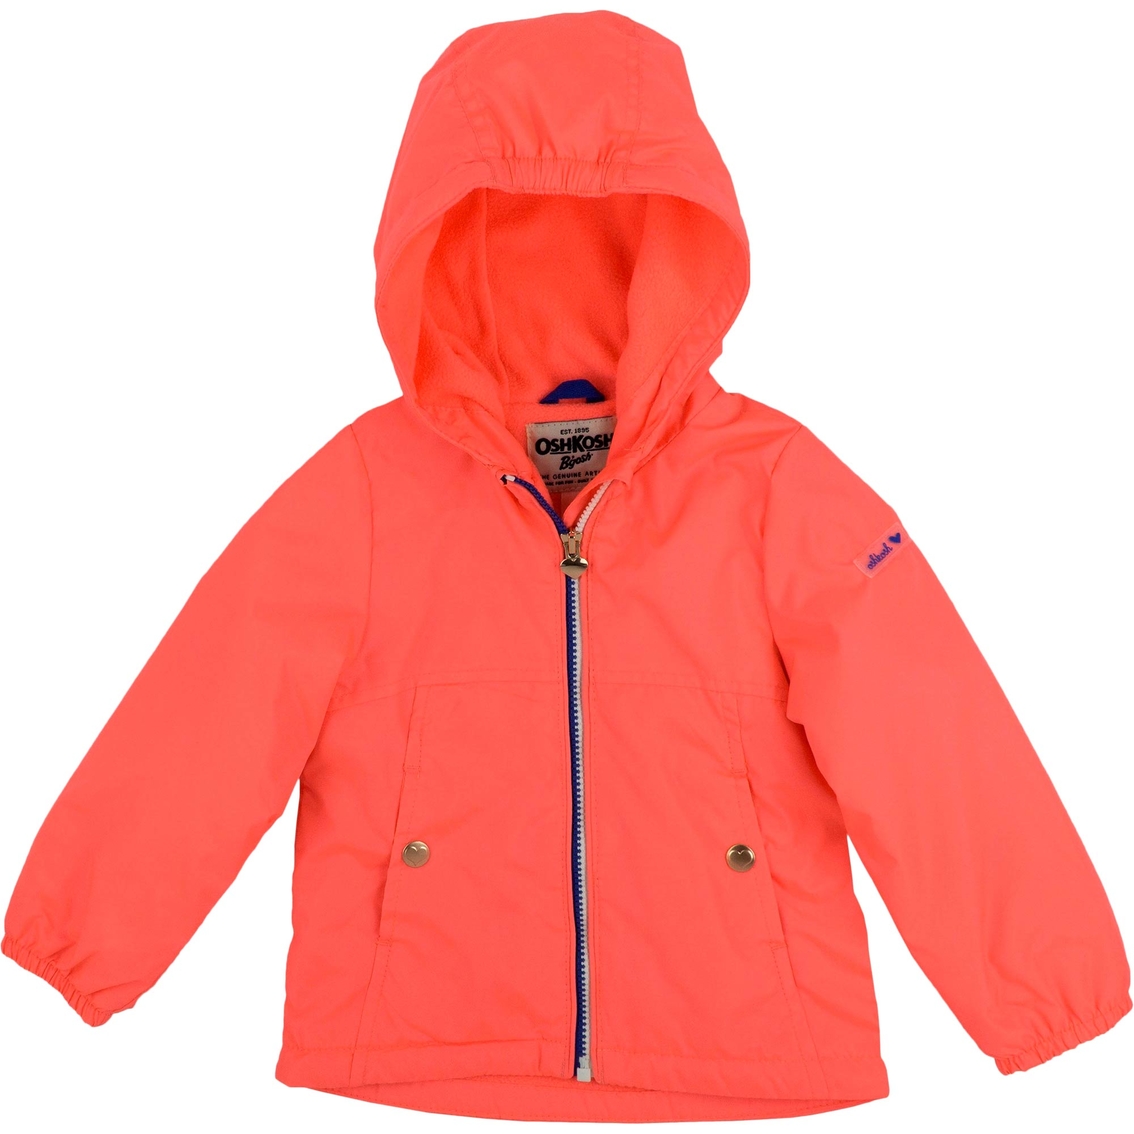 Oshkosh B'gosh Toddler Girls Fleece Lined Lightweight Jacket | Toddler ...